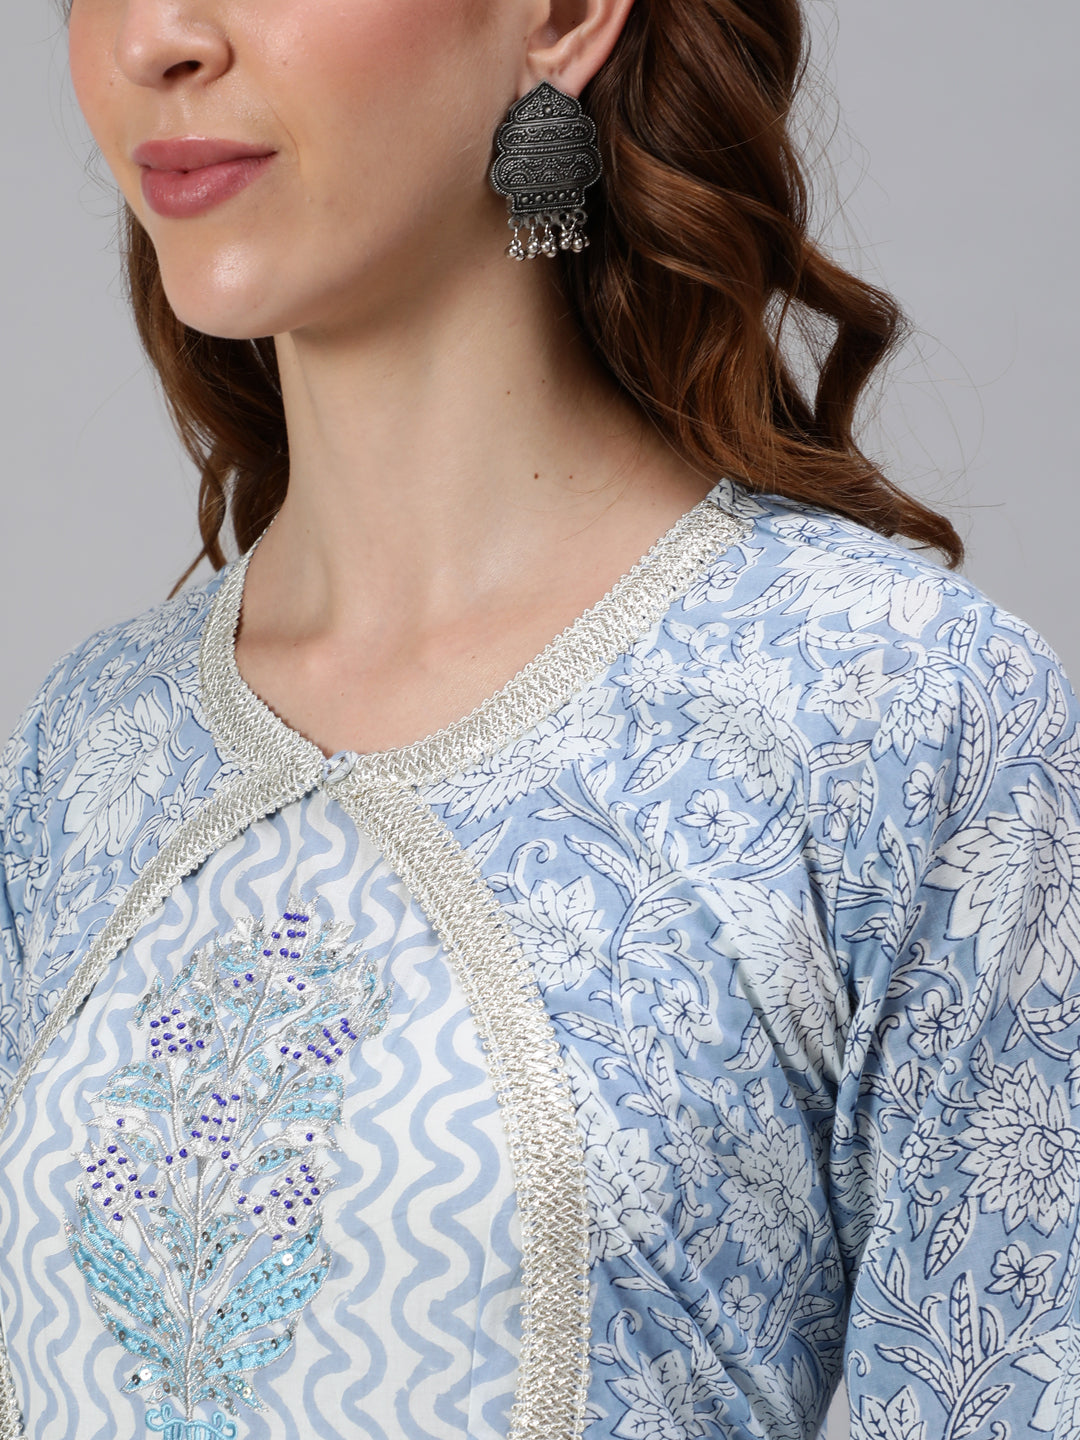 Ishin Women's Blue Zari Embroidered Flare Anarkali Kurta With Jacket